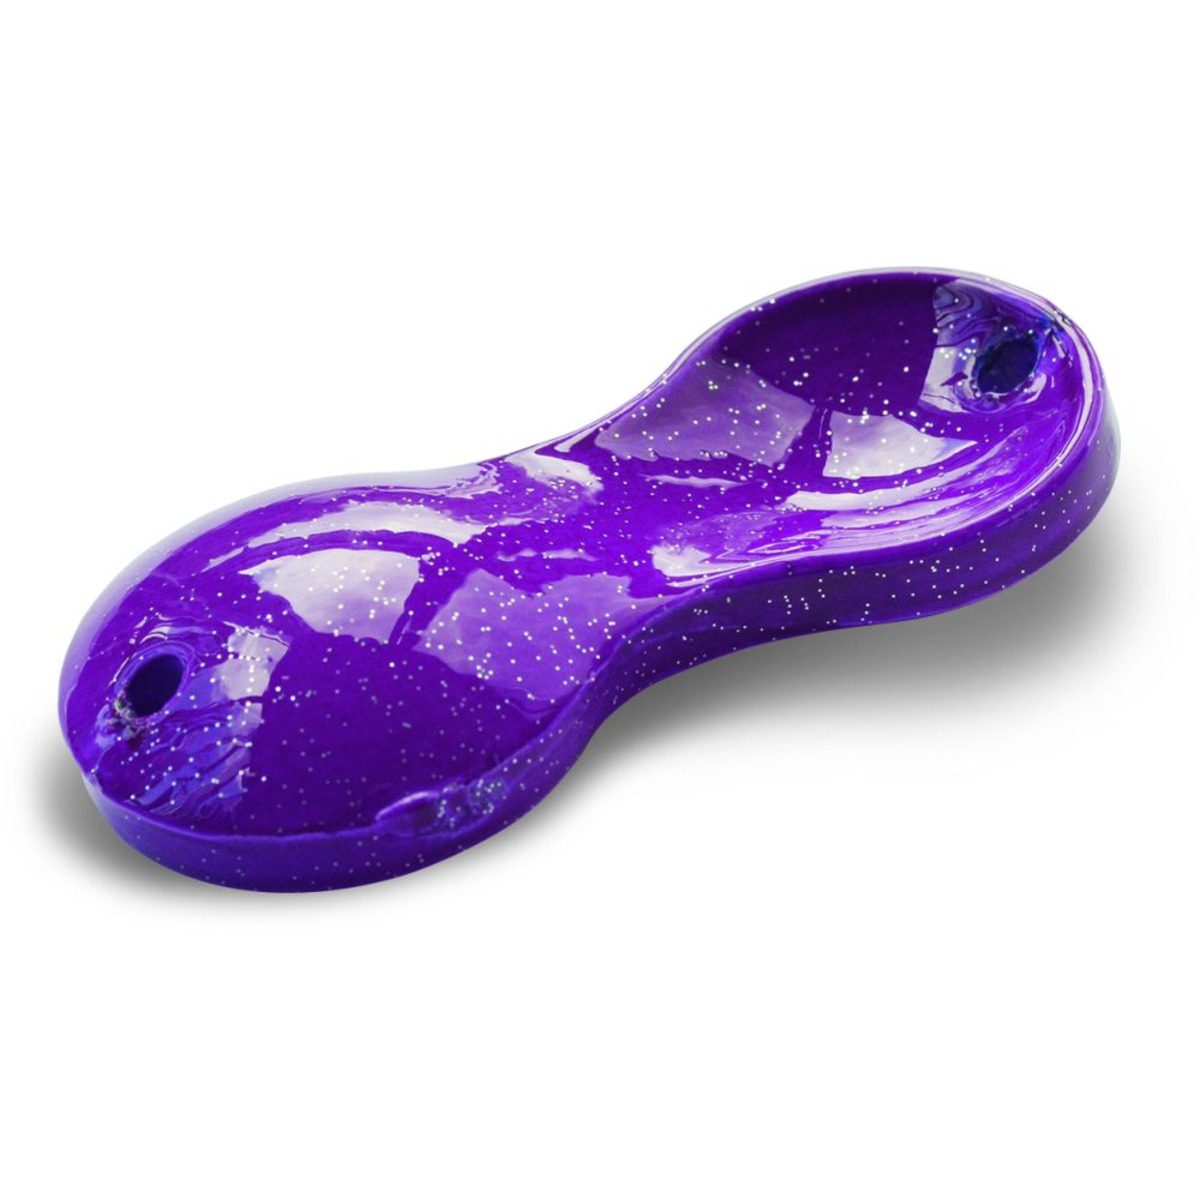 Zebco Z-sea Flatty Teaser, Lead Free - 60 g - purple/rainbow glitter